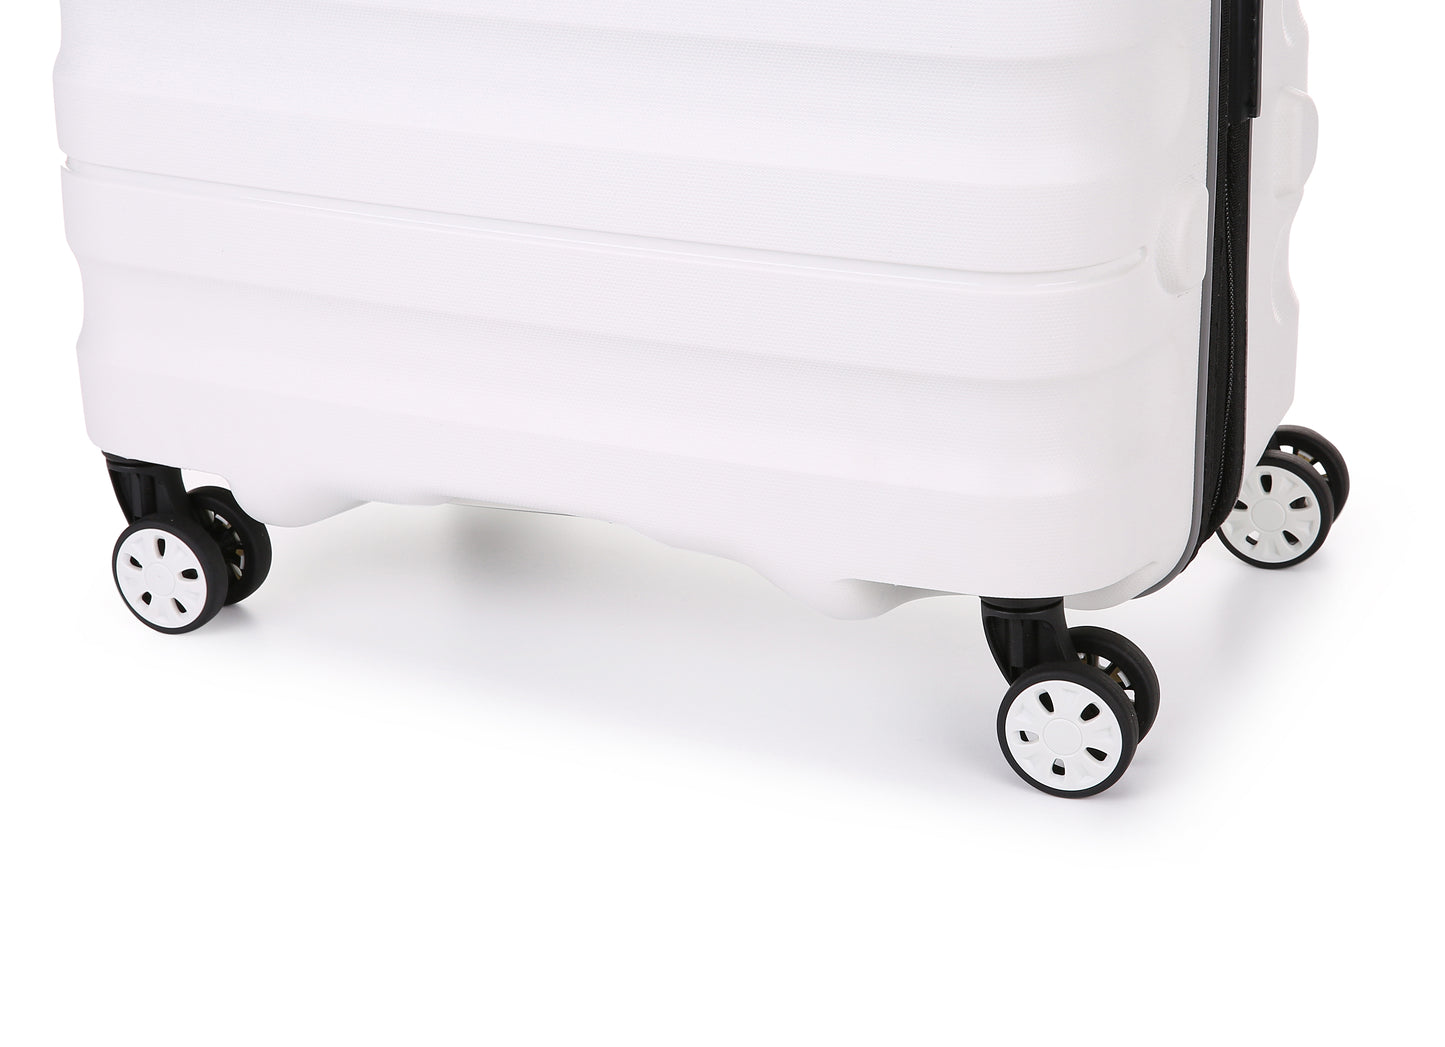 Antler - Lincoln Medium 68cm Hardside 4 Wheel Suitcase - White - rainbowbags